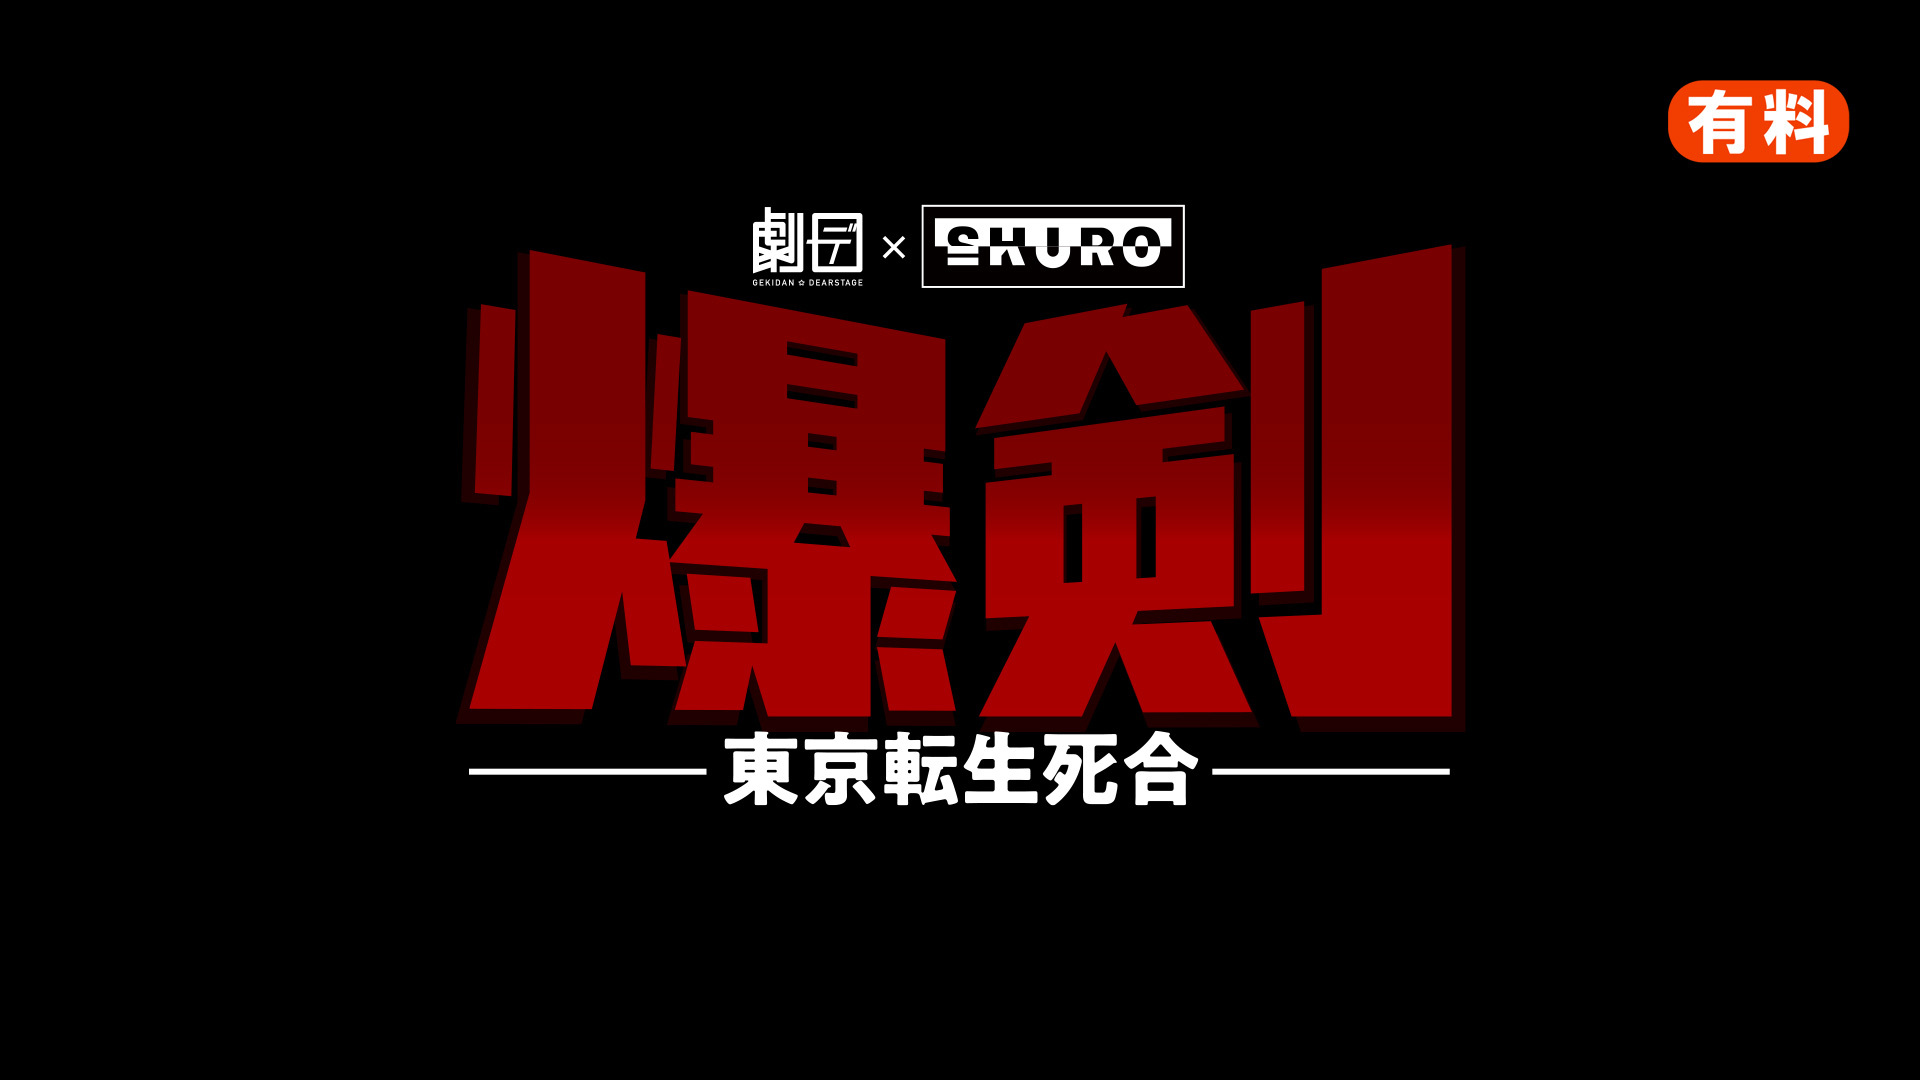 SHIROKURO STAGE 舞台「爆剣～東京転生死合～」